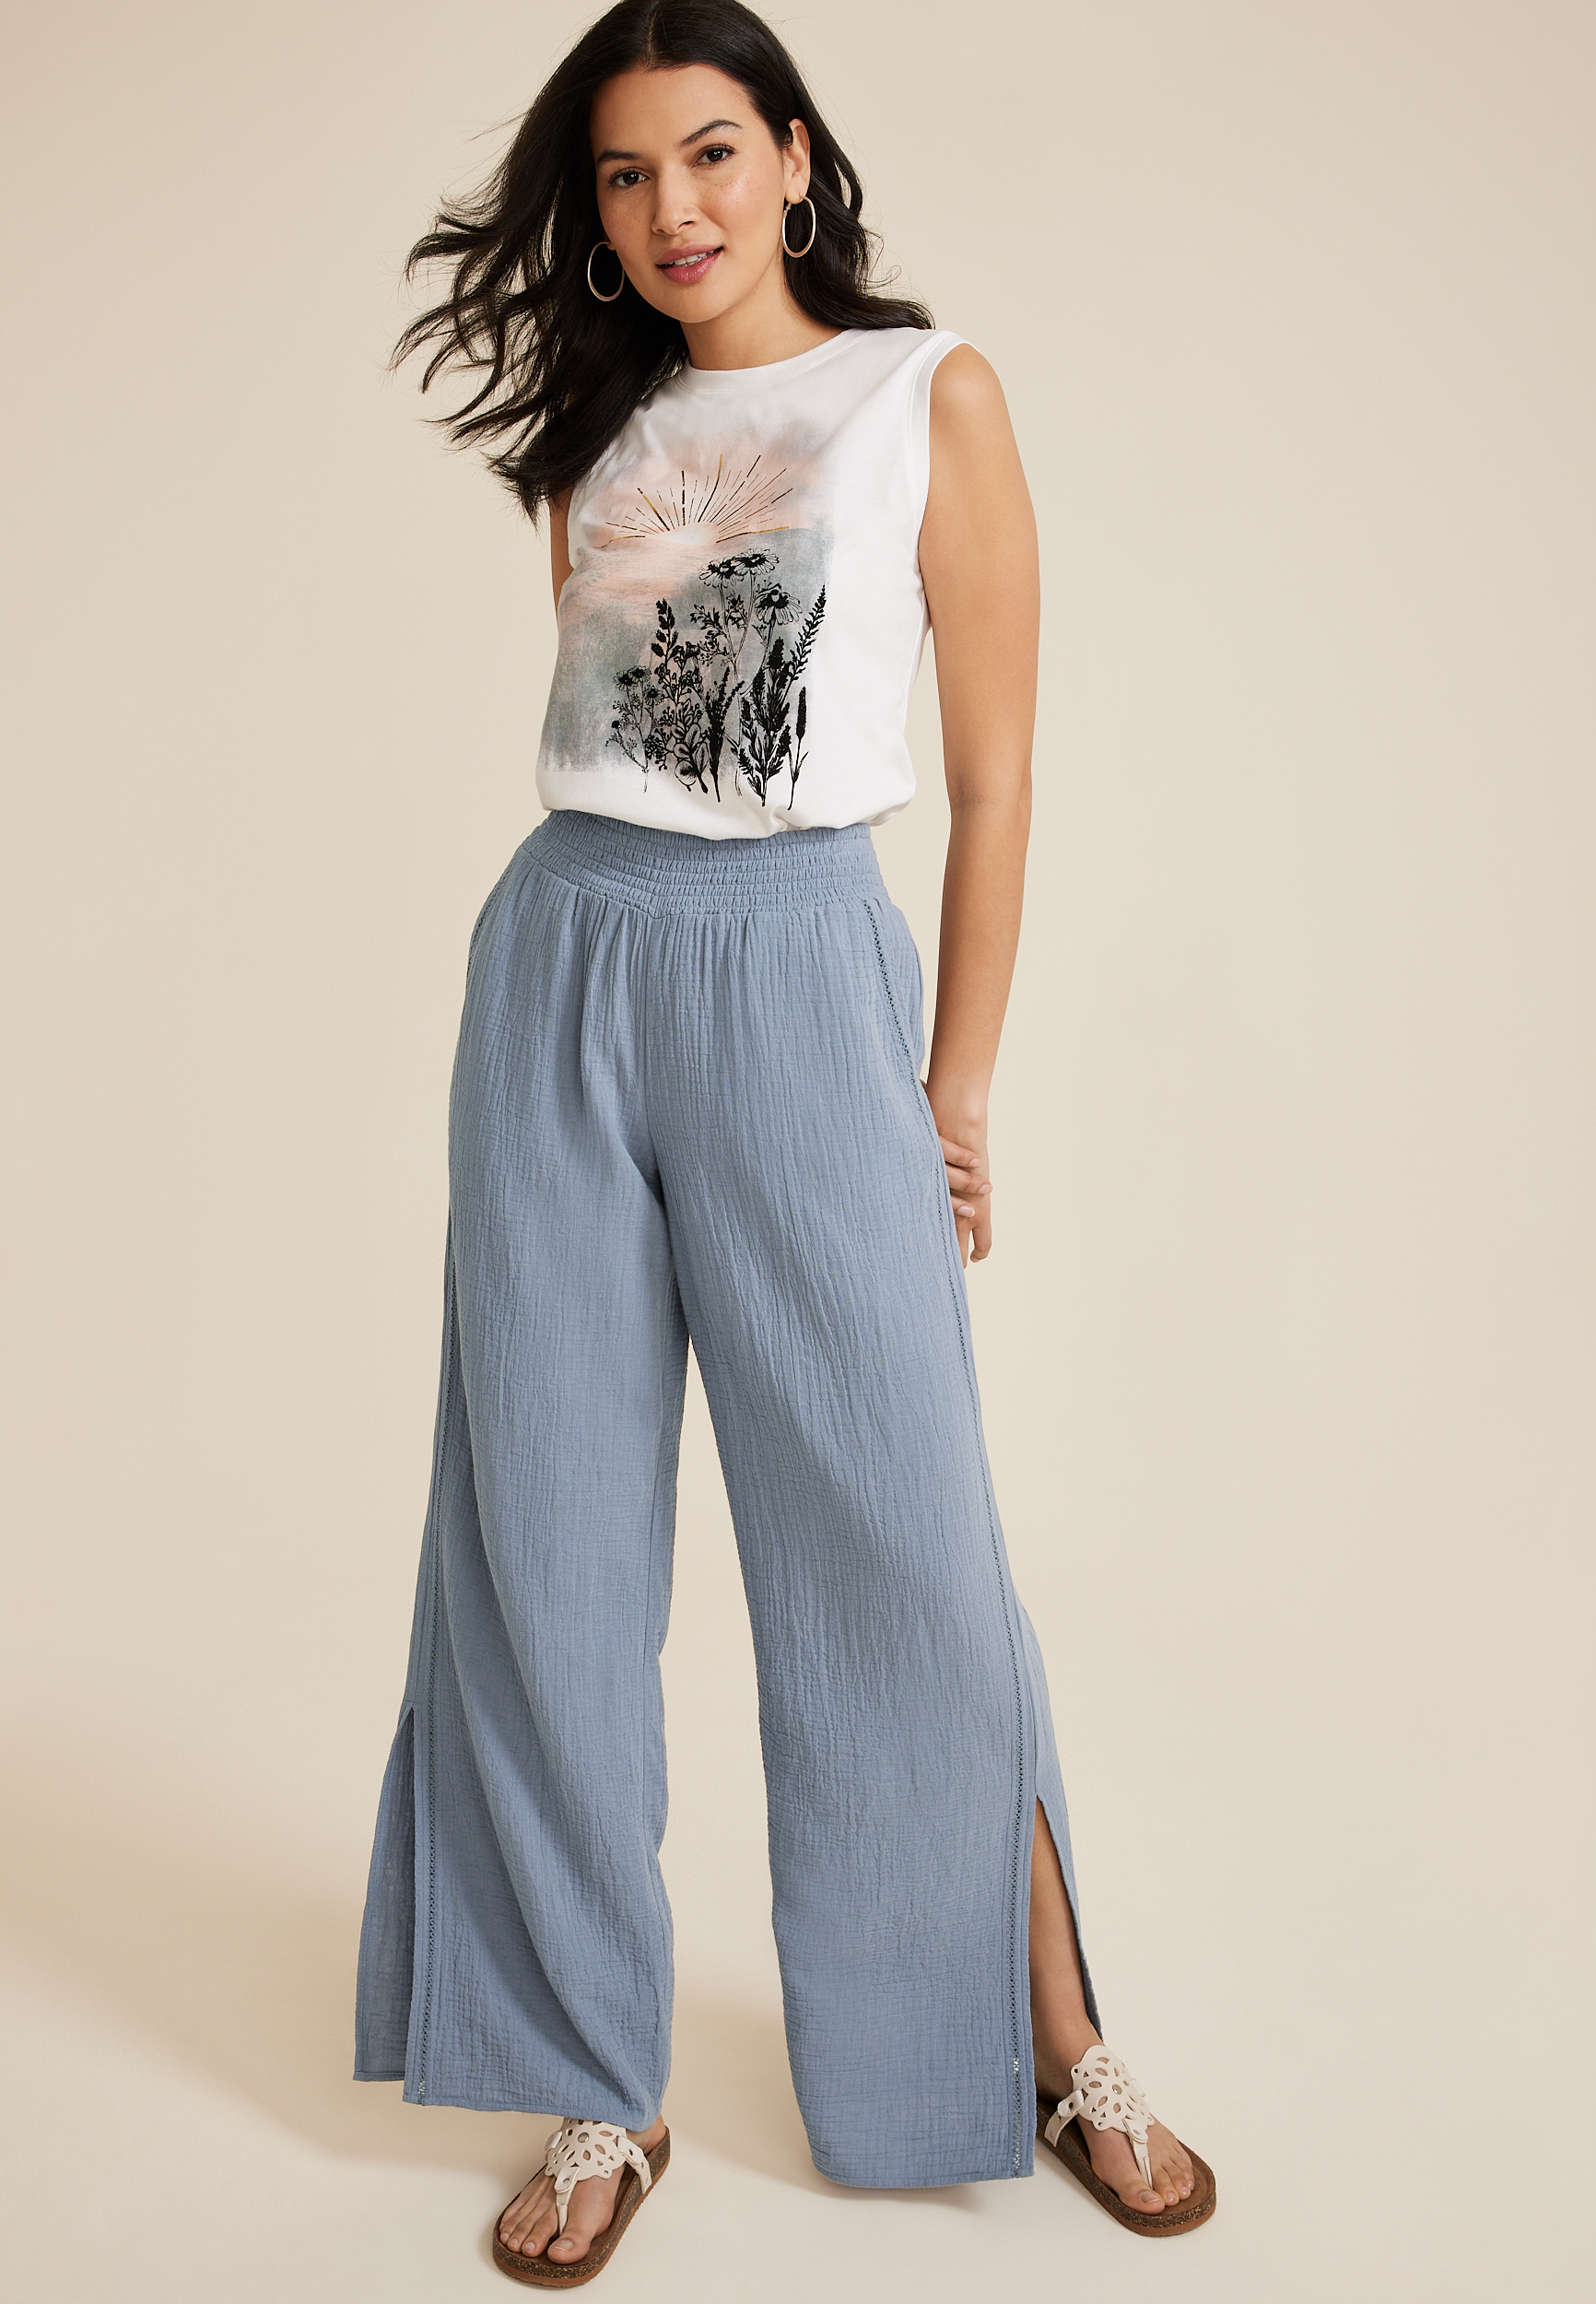 Maurices Brown Flat Front Straight Leg Dress Pants Women's Size 9/10 R –  Shop Thrift World